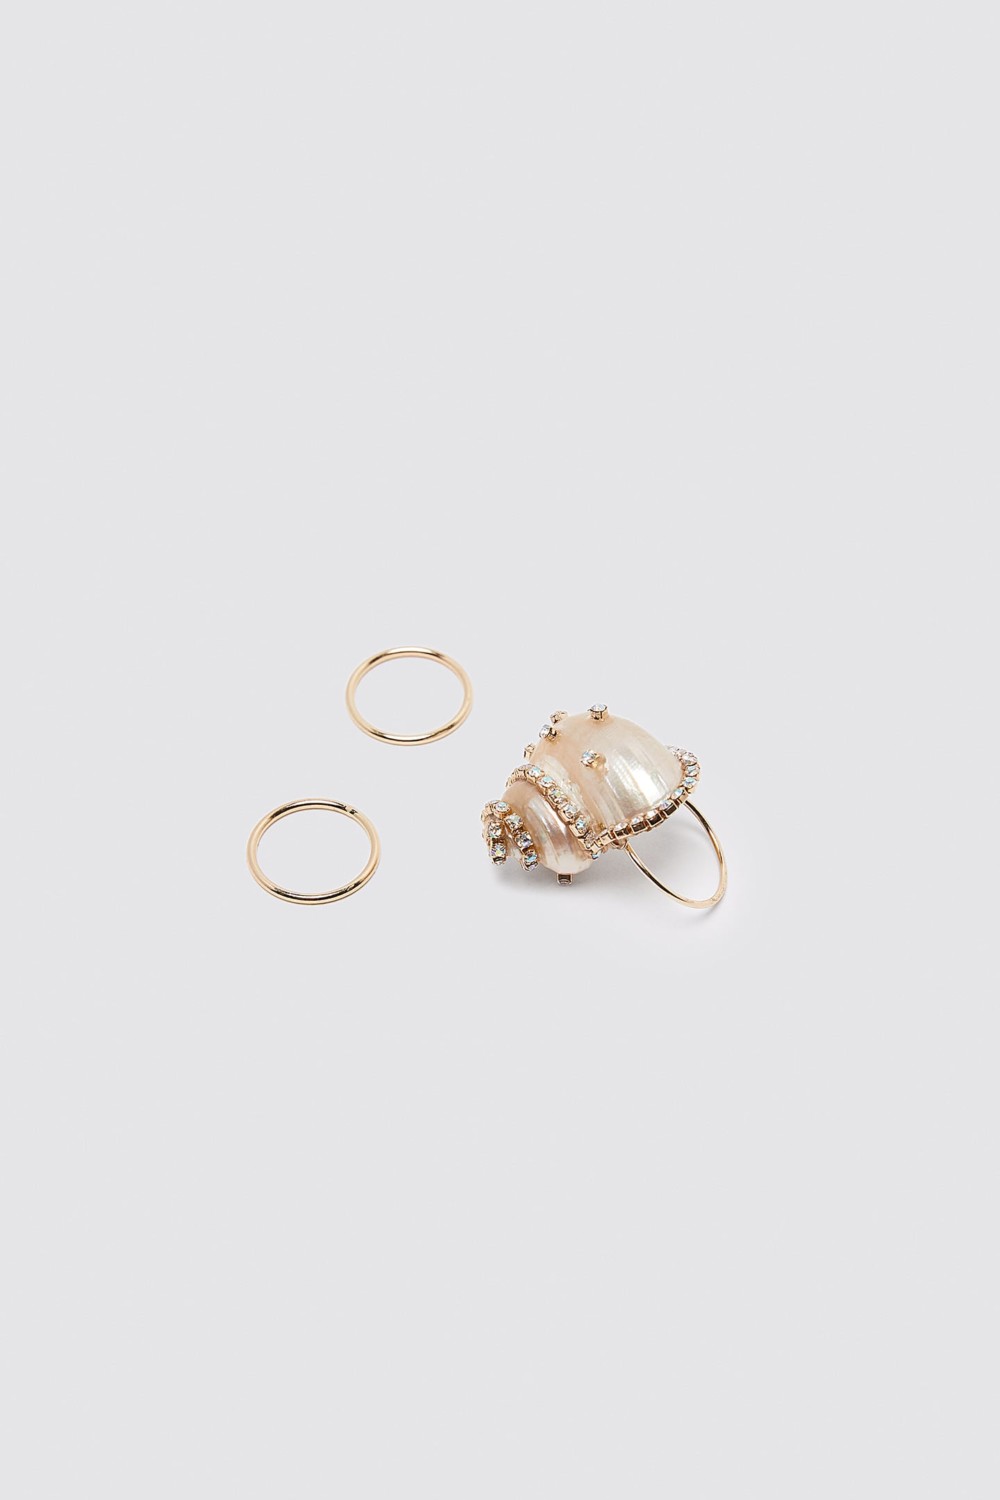 Fashion Blog Mode Tendance Ete 2020 Bijou Jewelry Zara Rings Bagues Coquillage Shell Or Gold